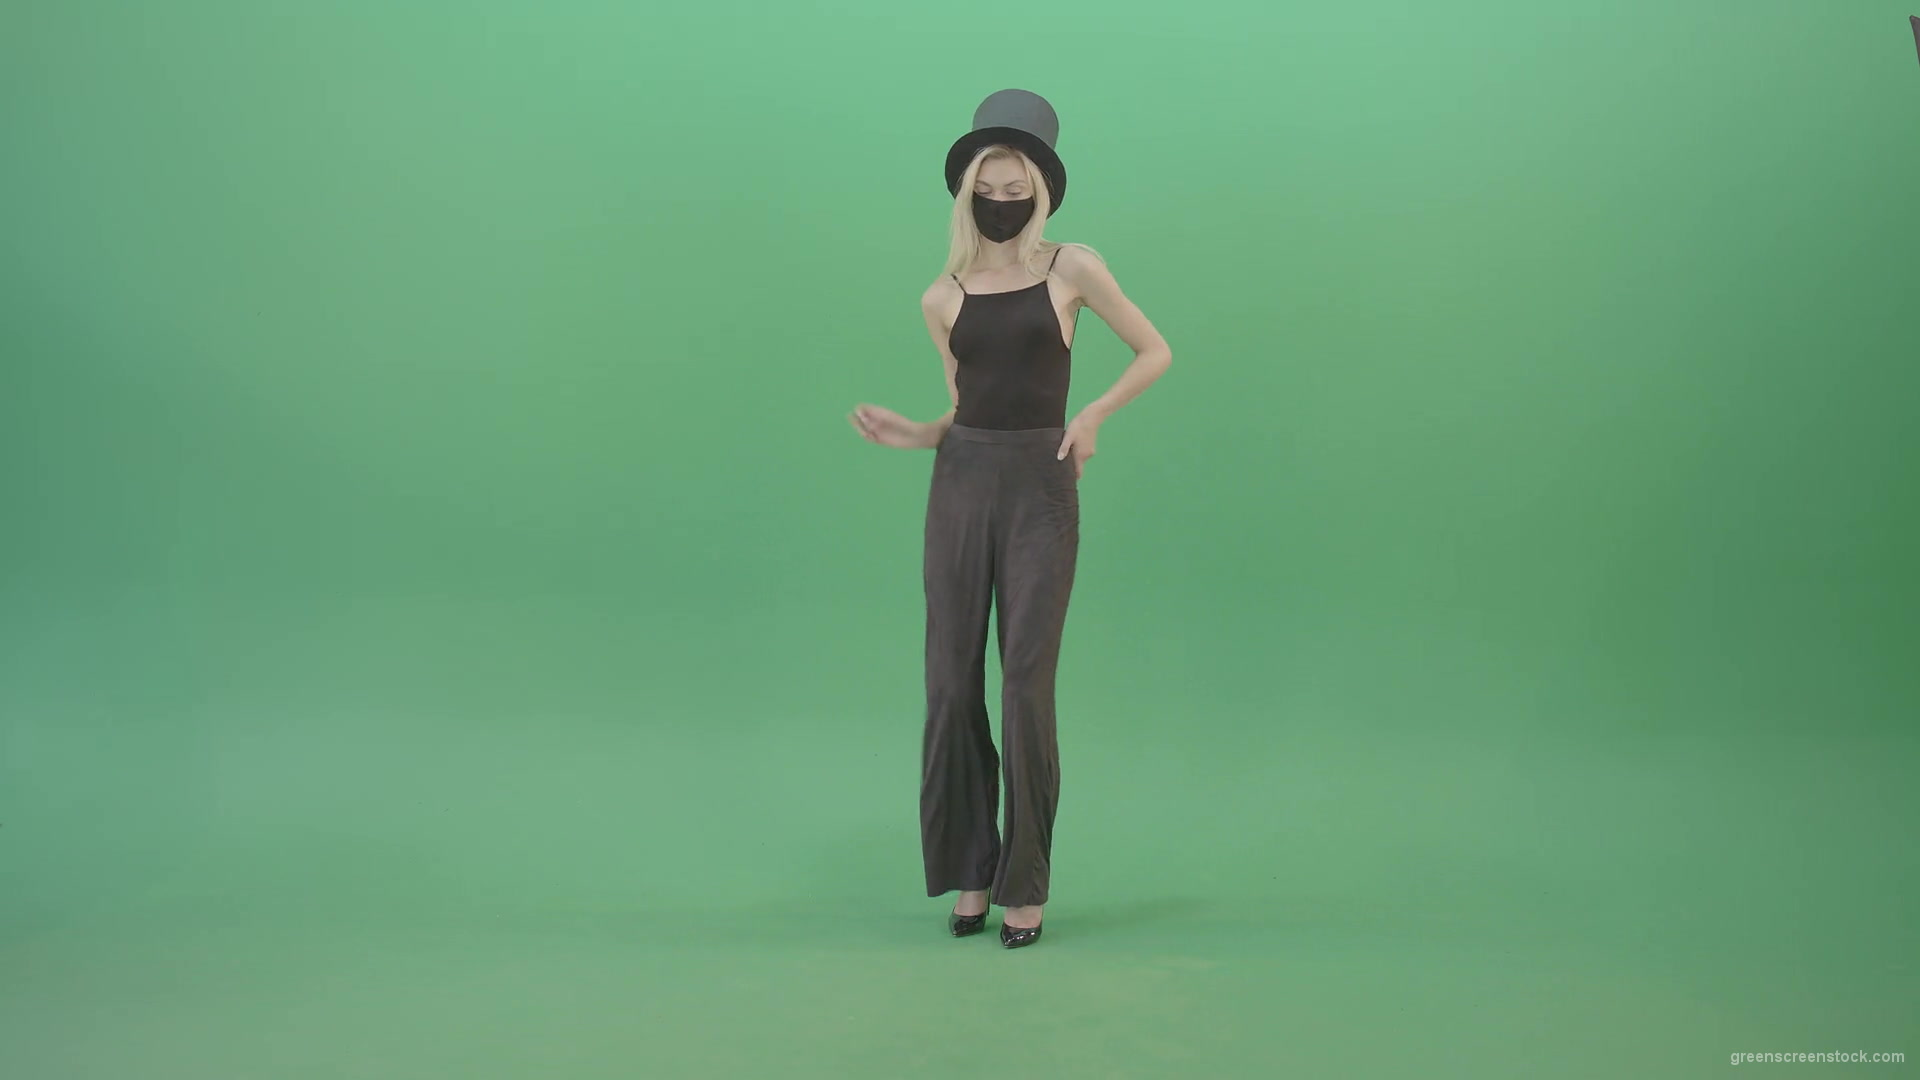 Blonde-Girl-in-Black-Cylinder-Hat-dancing-slowly-in-Corona-VIrus-Mask-on-green-screen-VIdeo-Footage-1920_002 Green Screen Stock